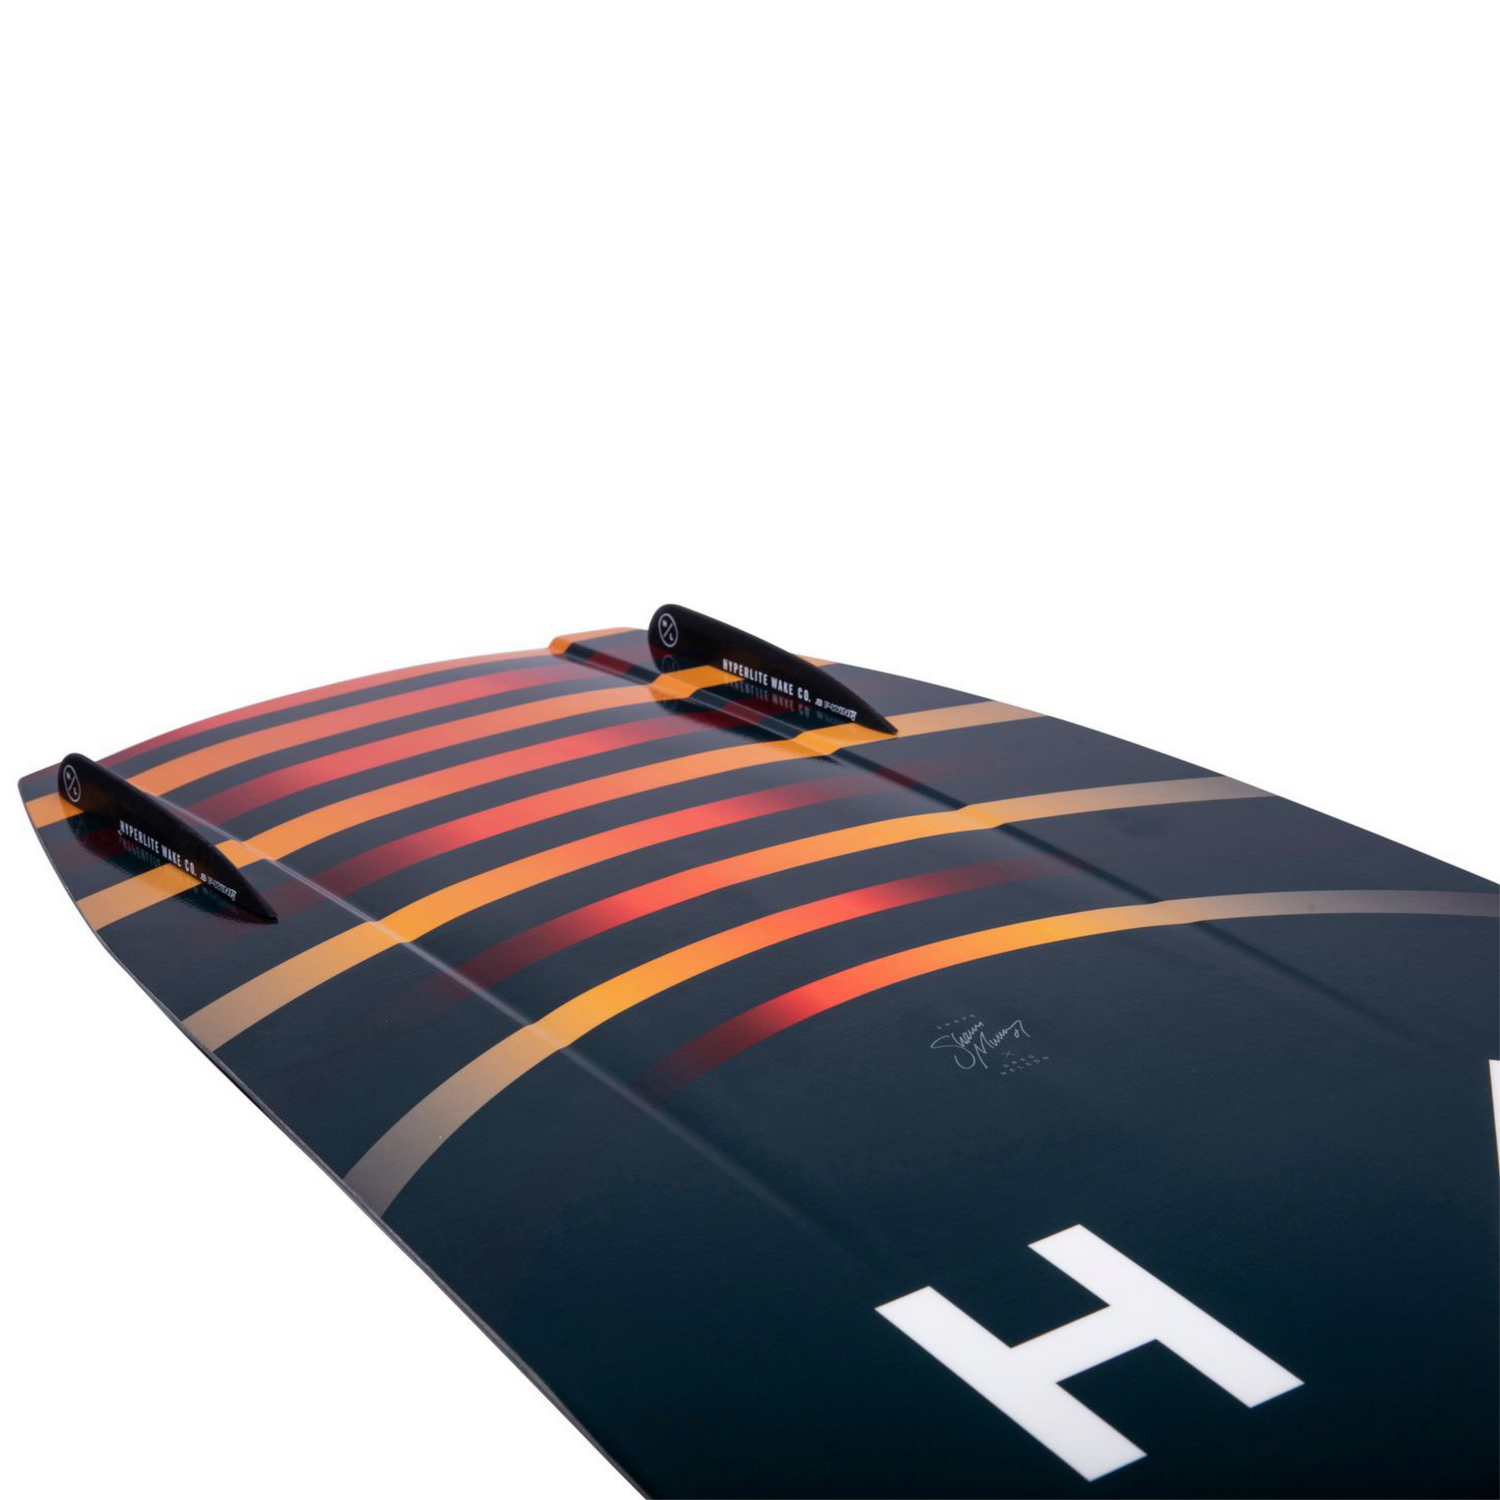 Hyperlite Hyperlite Baseline wakeboard in black, white, red and orange.